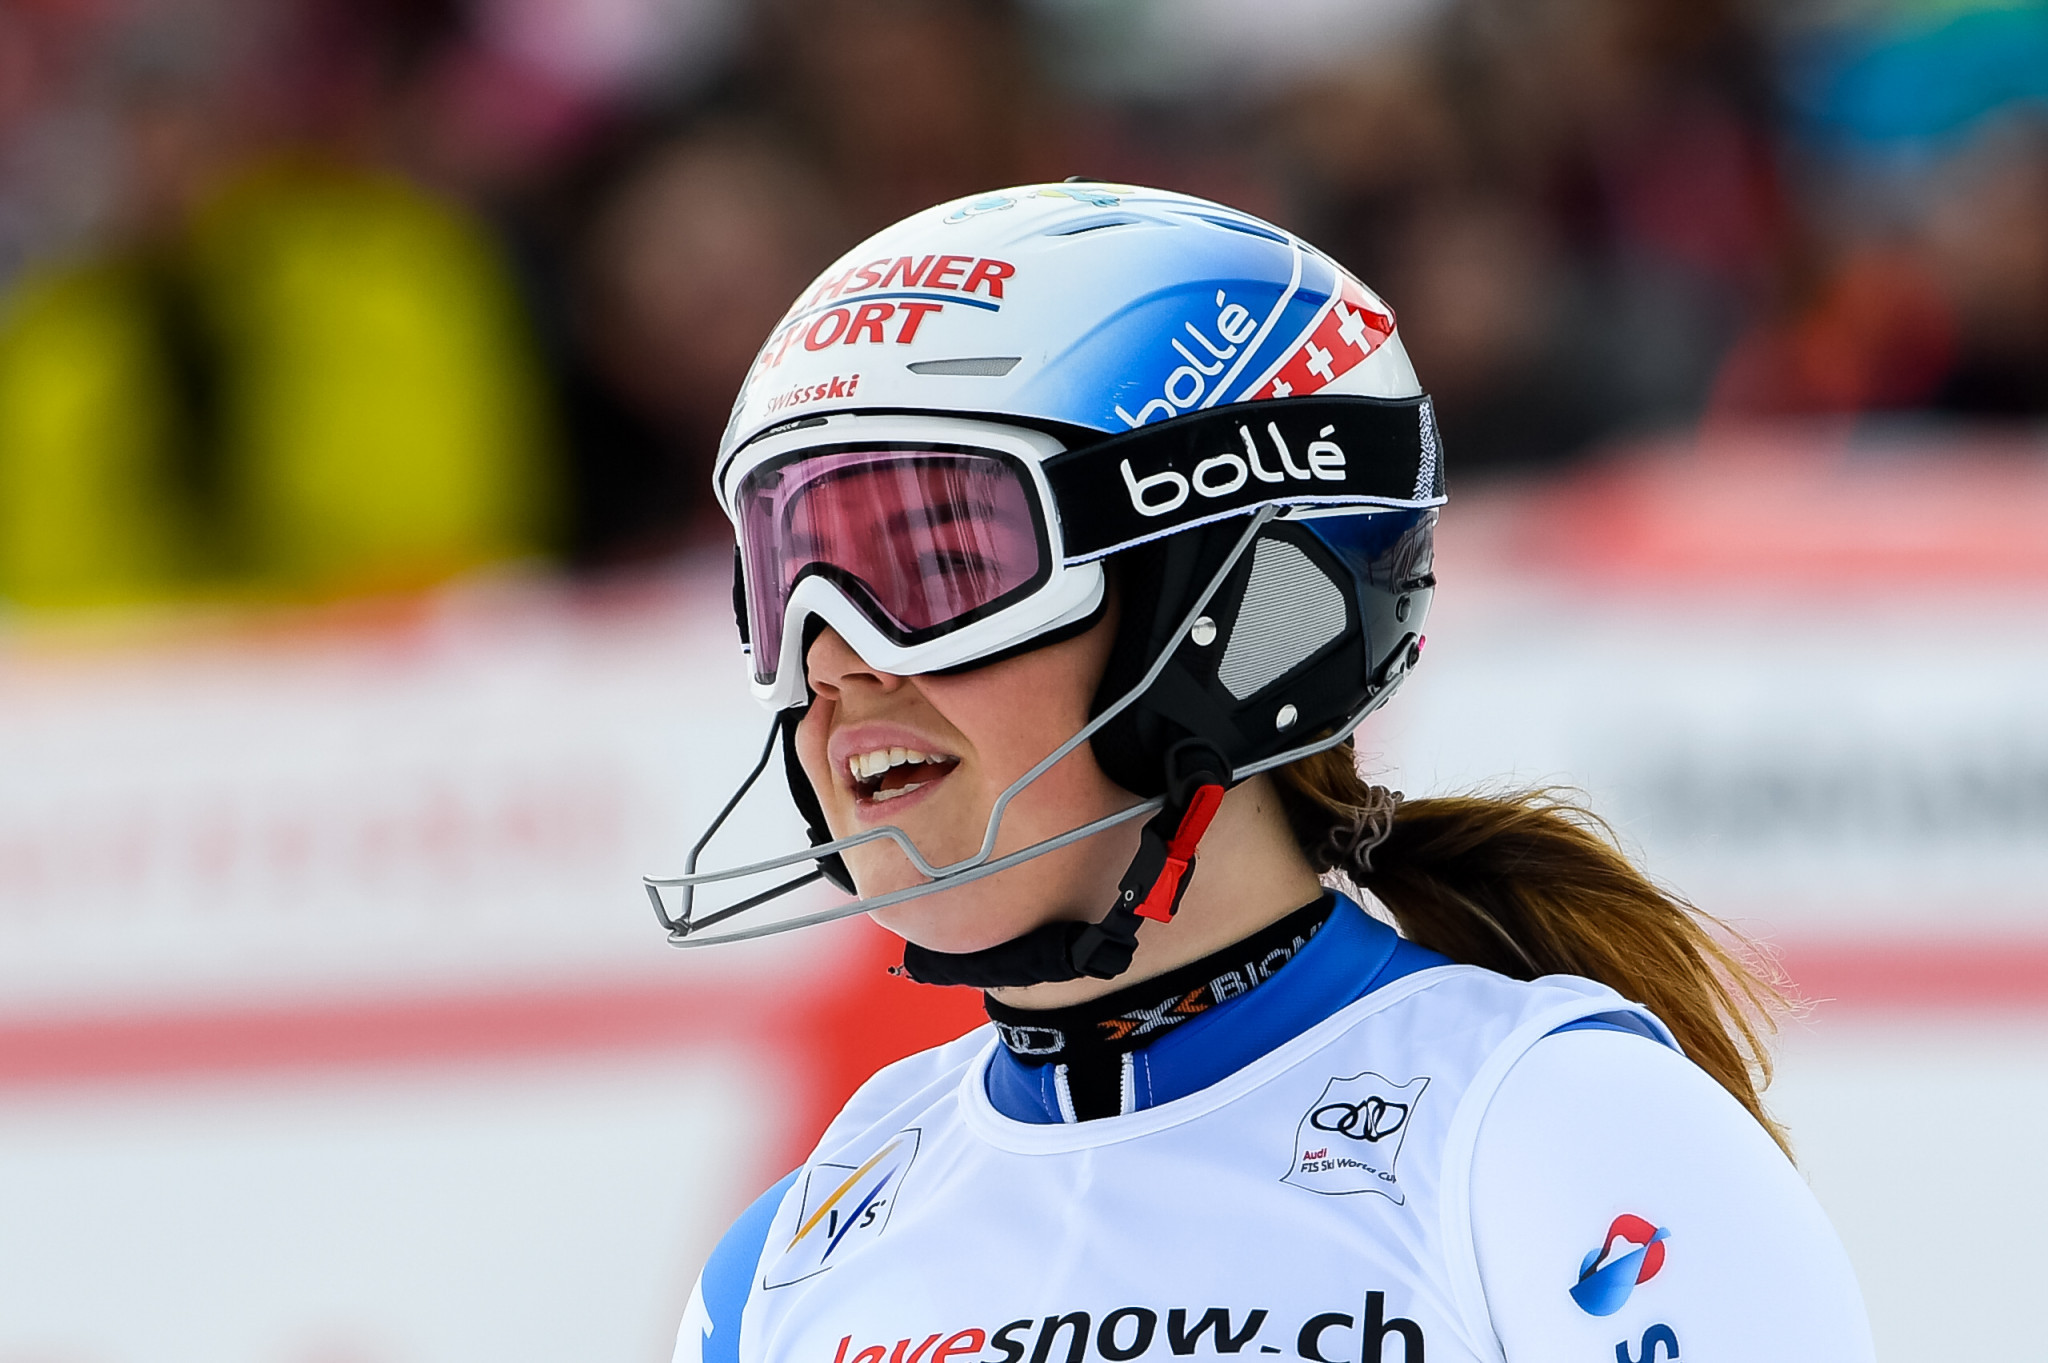 Swiss skier Meillard suffers season-ending injury after training crash